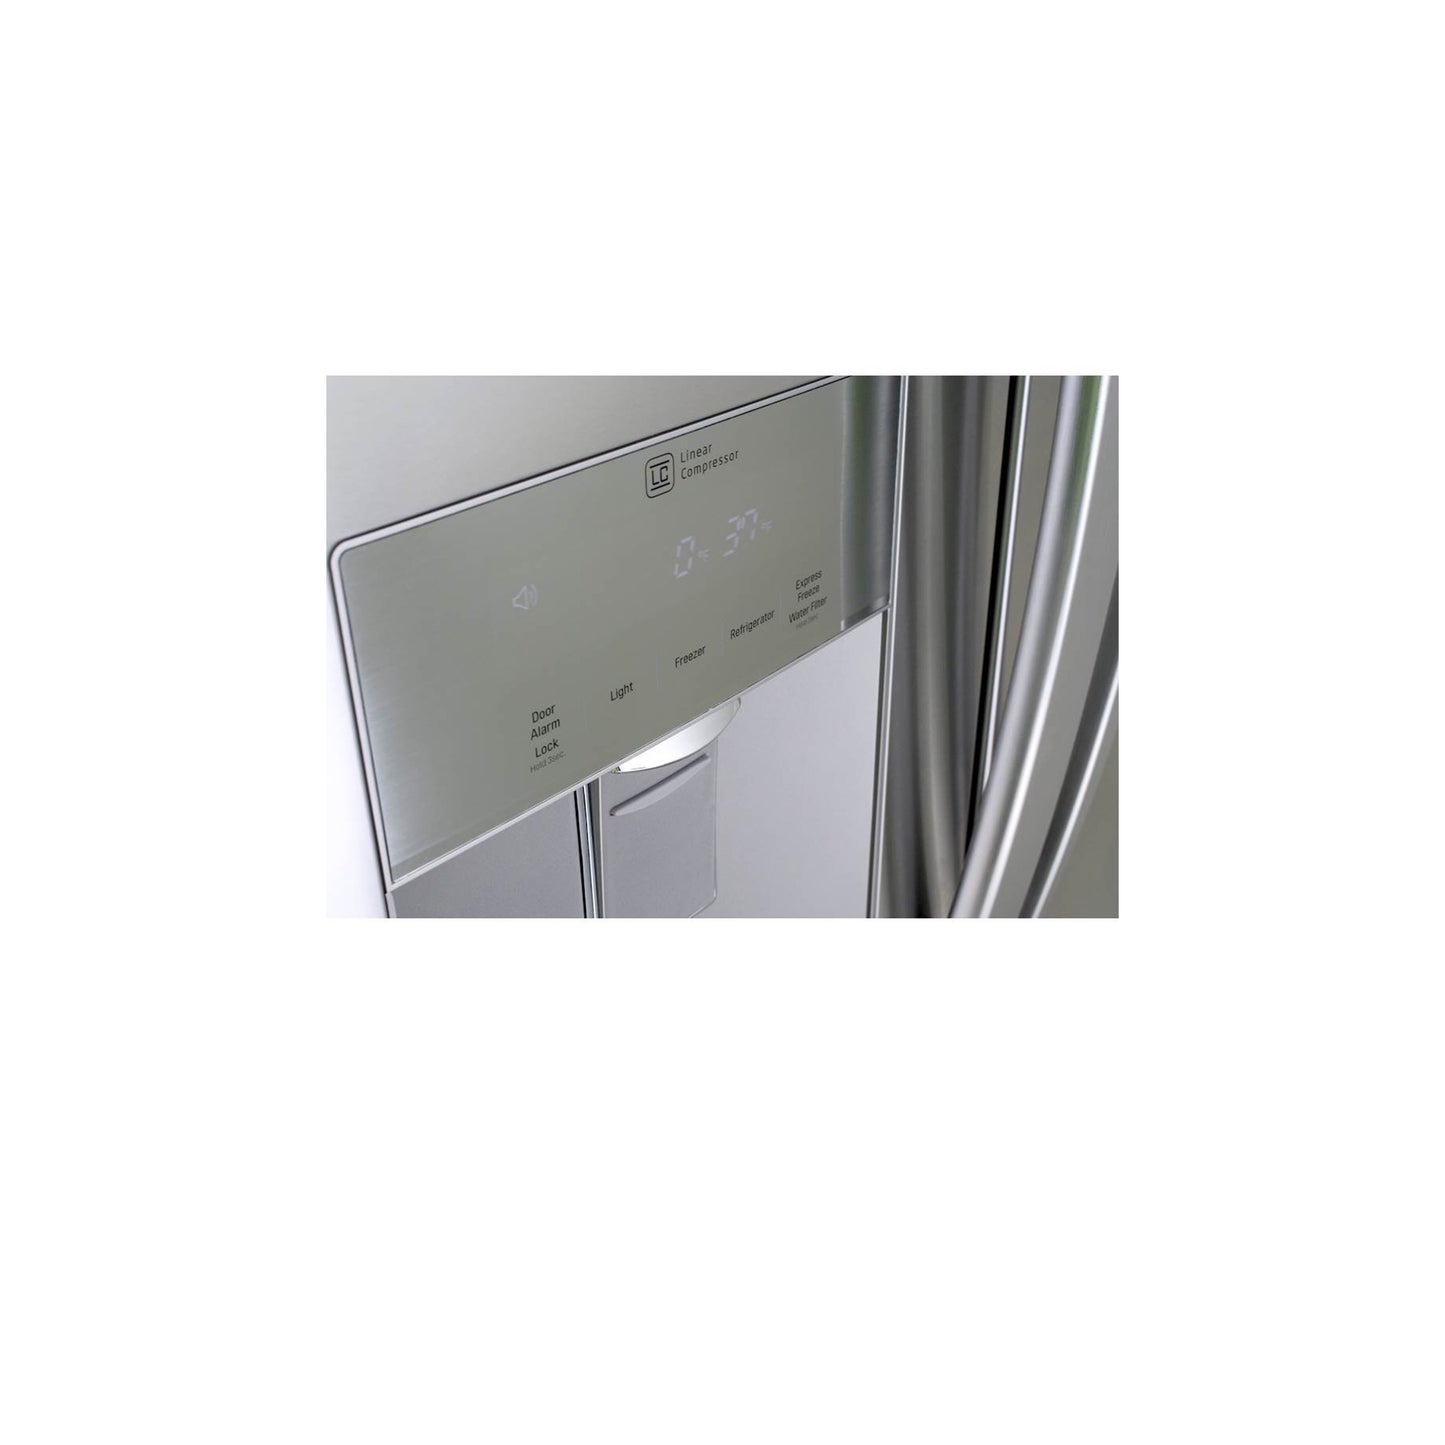 36-inch Wide Counter-Depth Refrigerator - 23 cu. ft. - LRMDC2306S